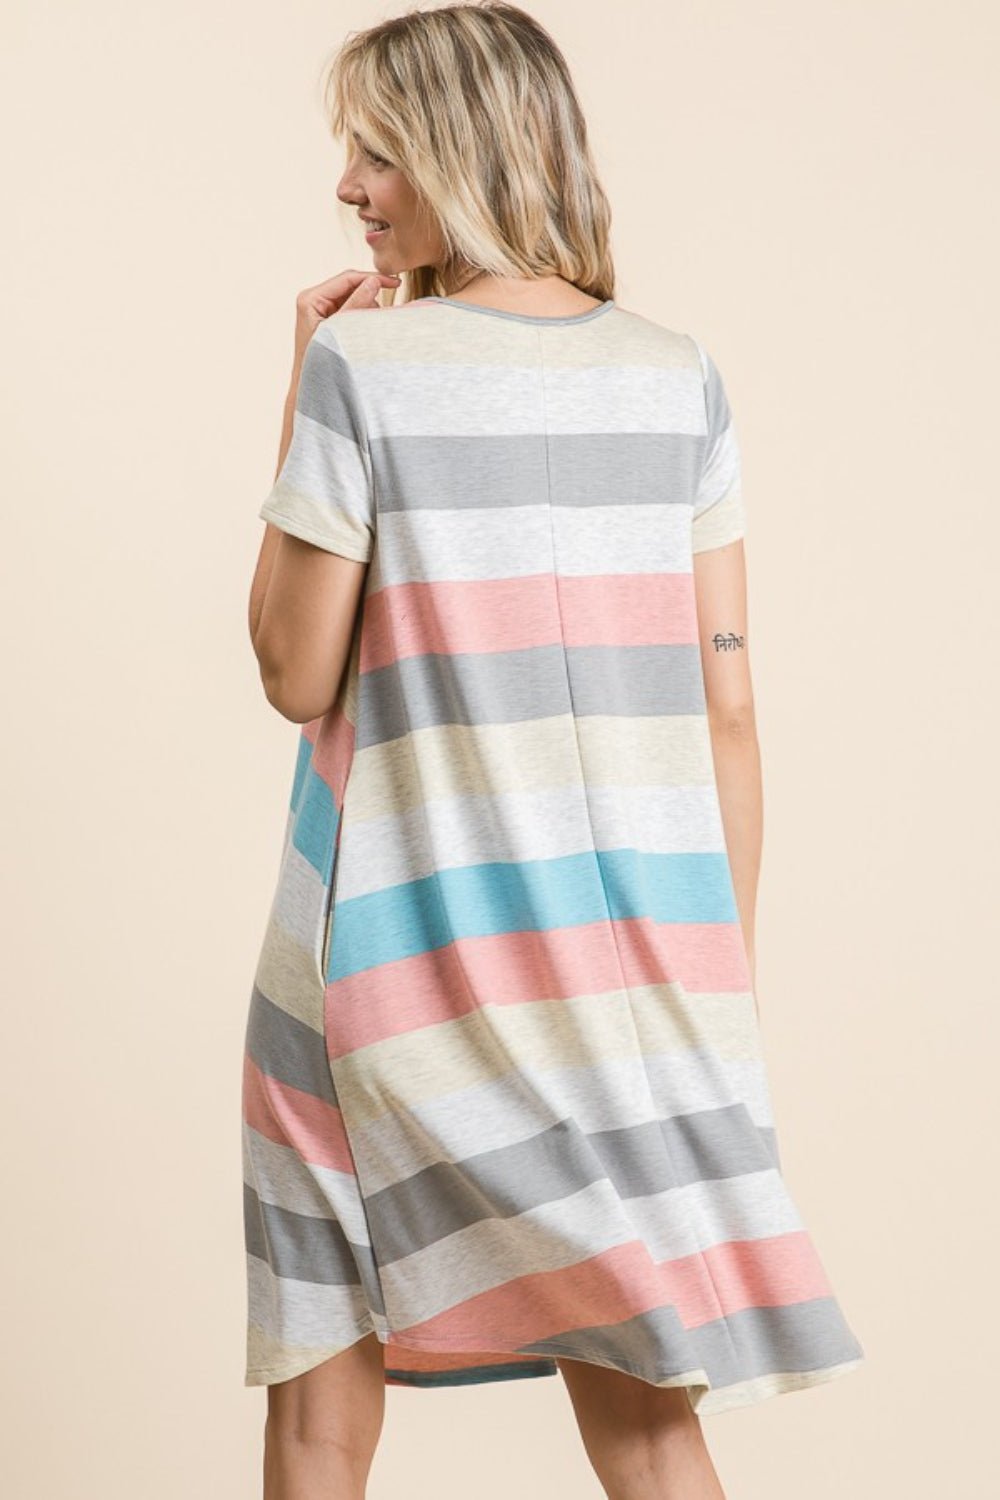 Striped Short Sleeve Mini Dress with PocketsMini DressBOMBOM